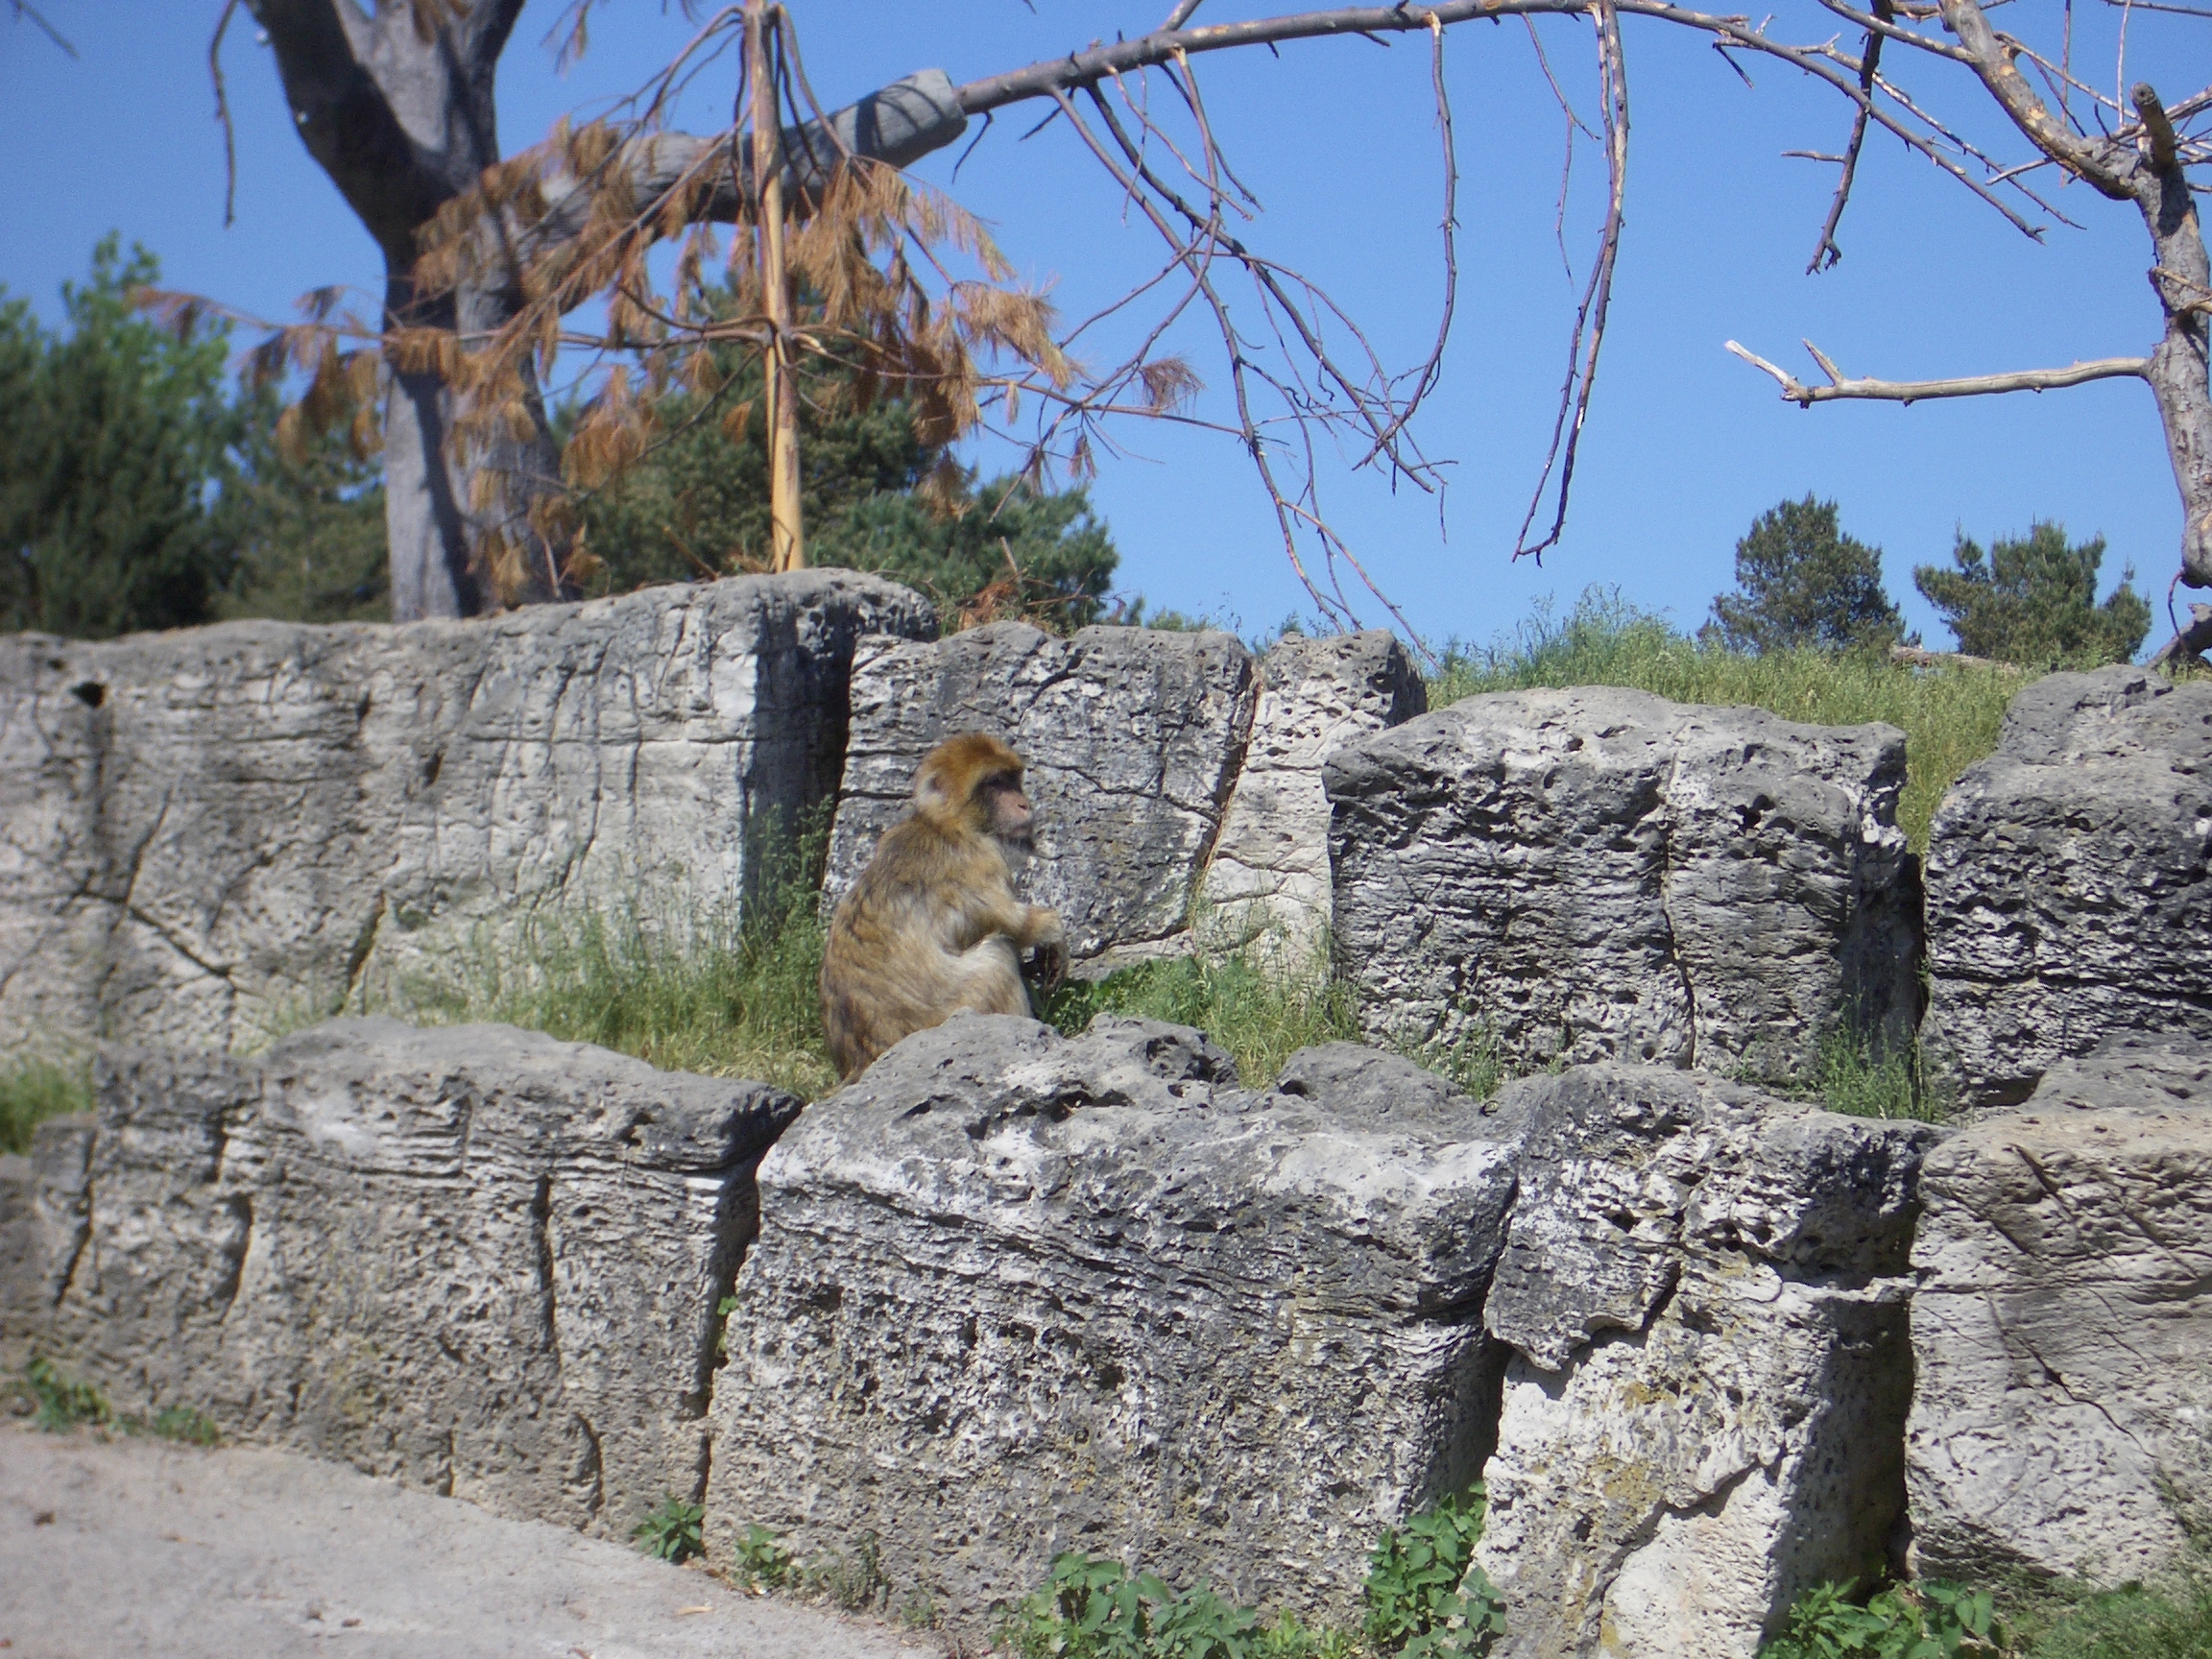 mattphilip monkey ape baboon rocks sitting orange fur